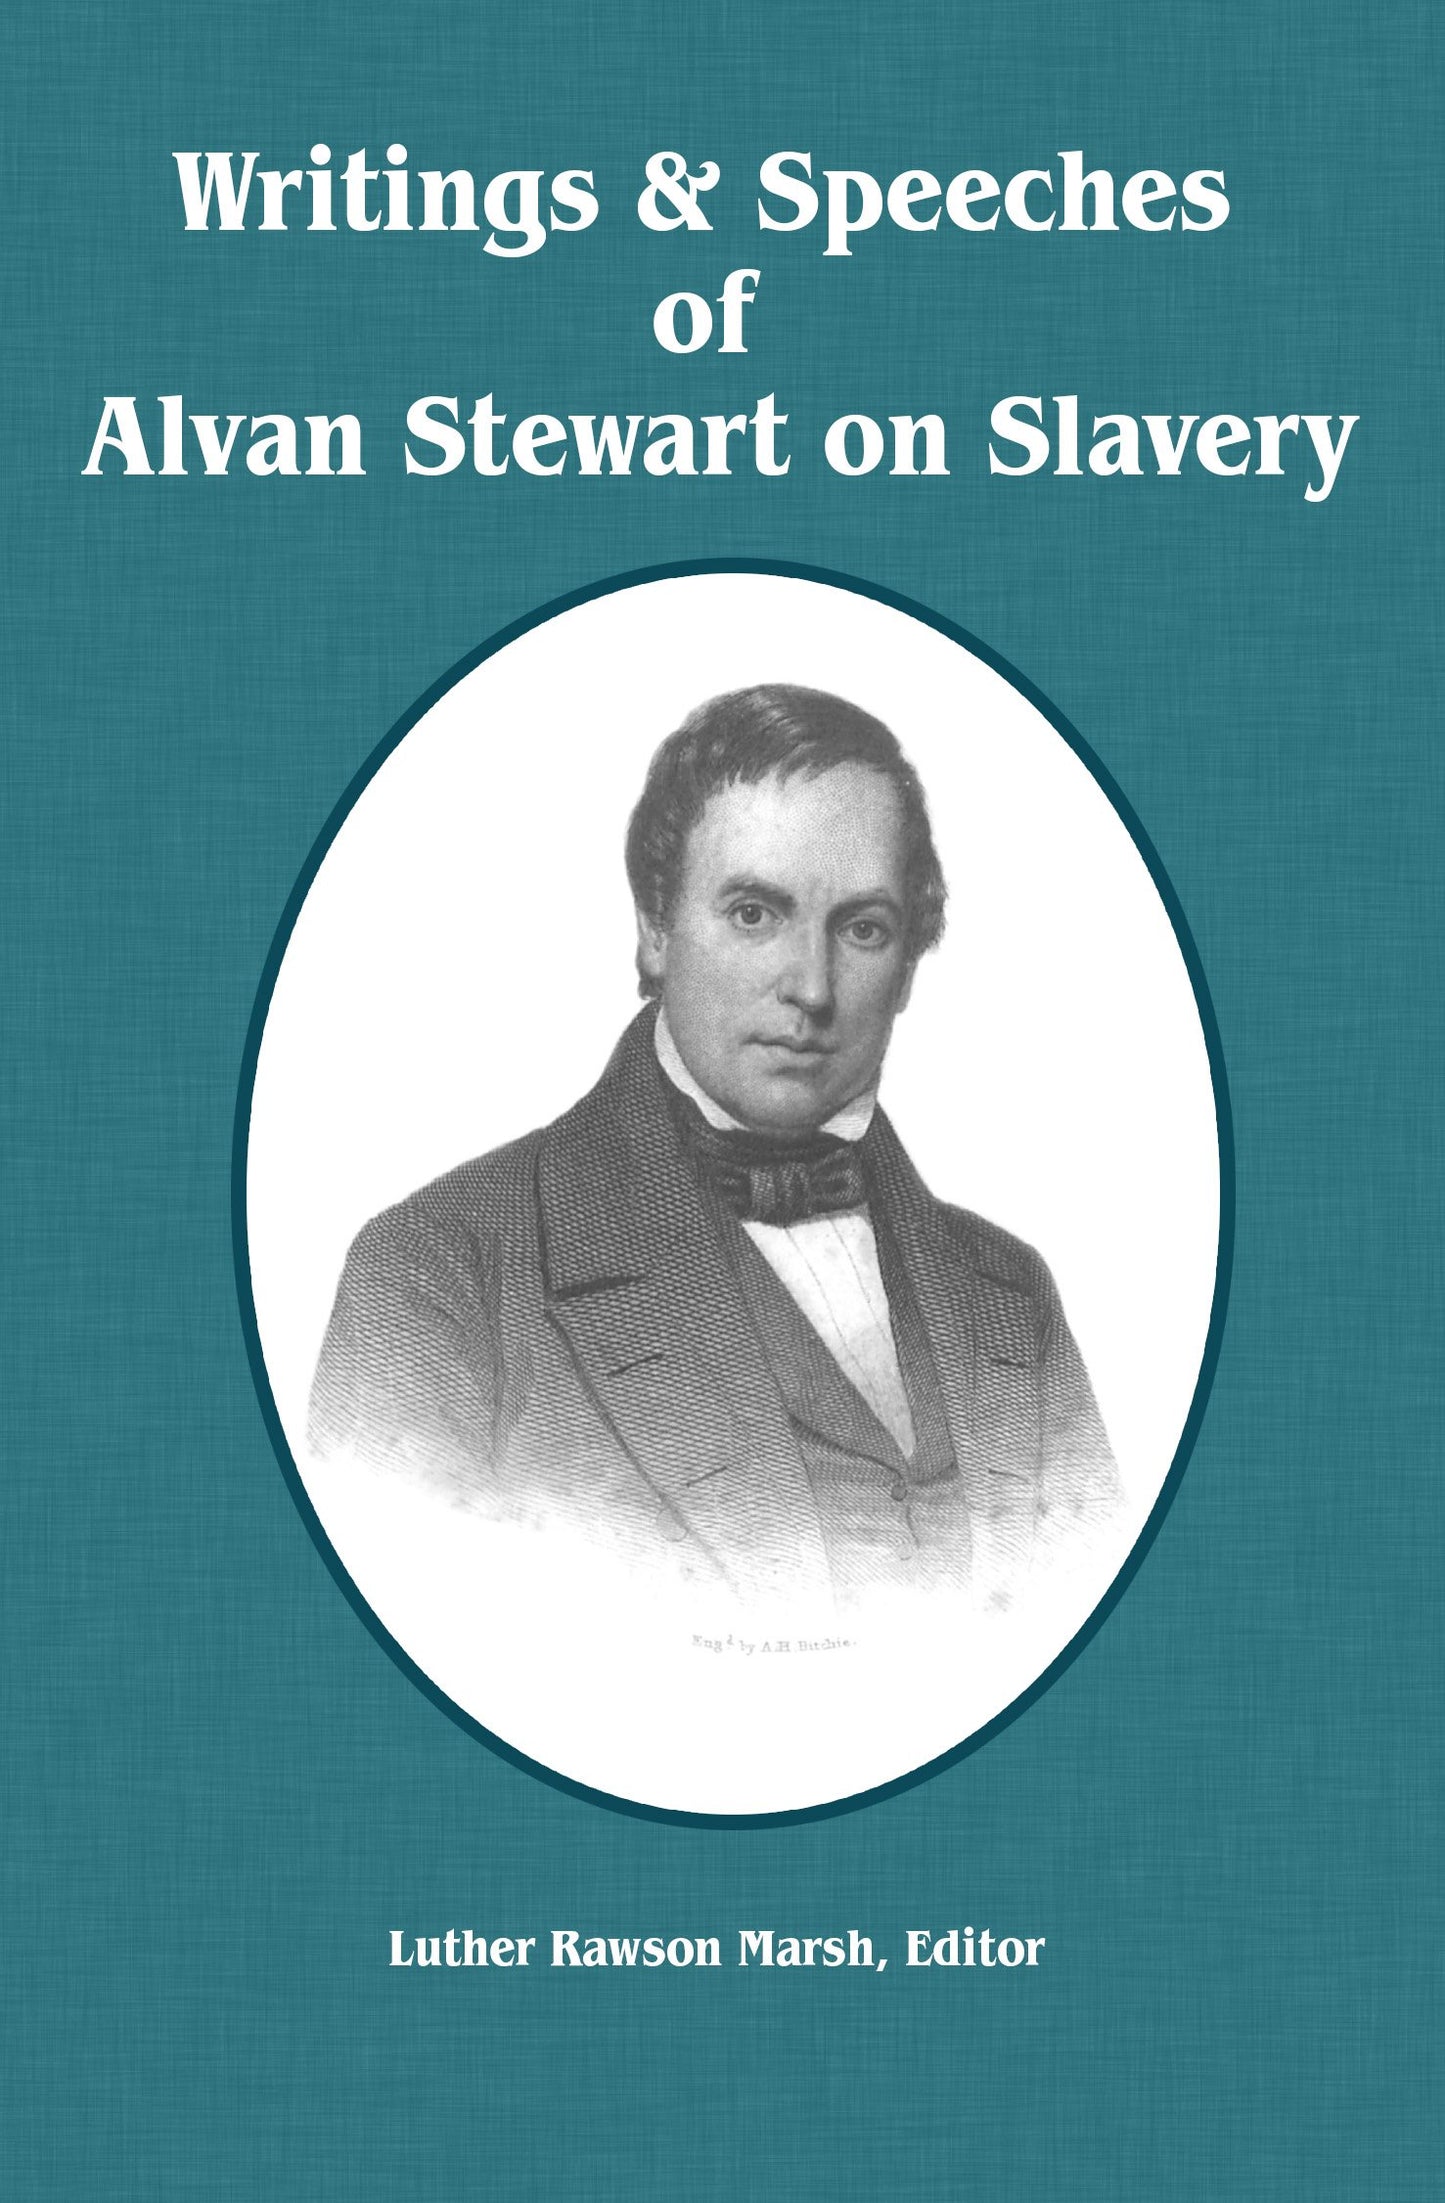 Writings & Speeches of Alvin Stewart on Slavery